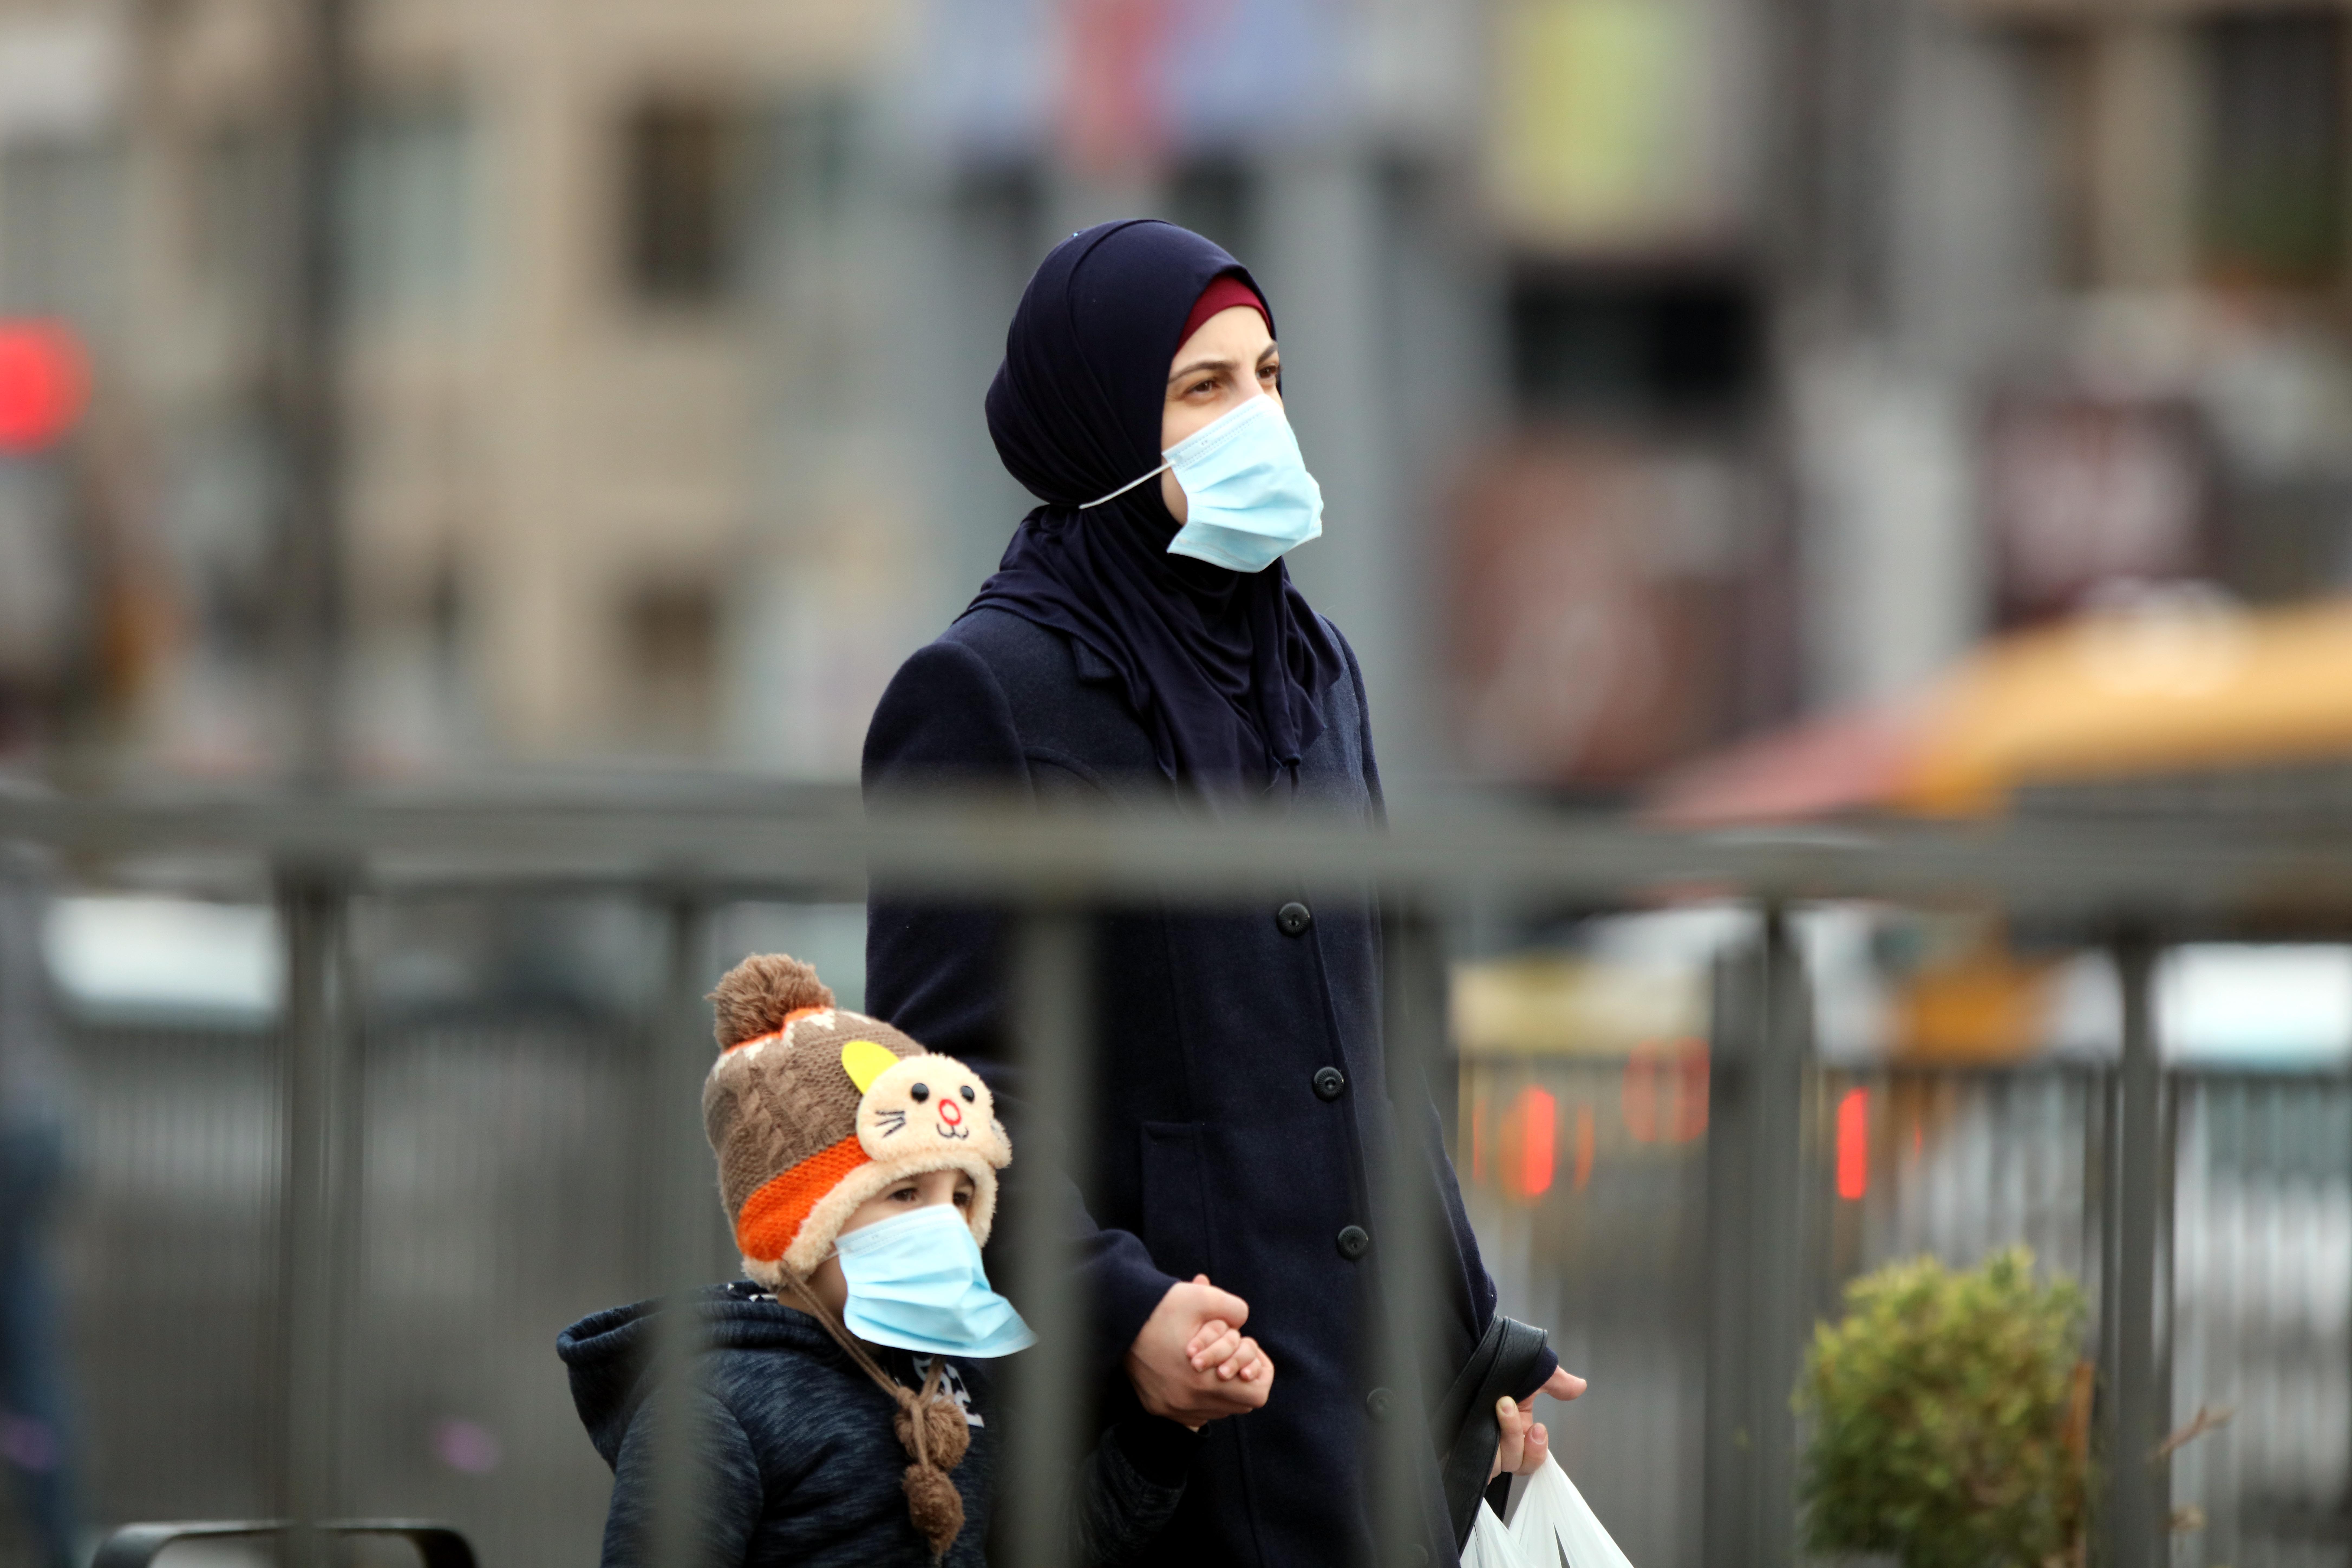 AMMAN, Orang-orang yang mengenakan masker menyusuri sebuah jalan di Amman, Yordania, pada 21 November 2021. Yordania memasuki gelombang ketiga pandemi COVID-19 dengan jumlah kasus mingguan melonjak menjadi sekitar 20.000 kasus, menurut kementerian kesehatan negara itu. (Xinhua/Mohammad Abu Ghosh)